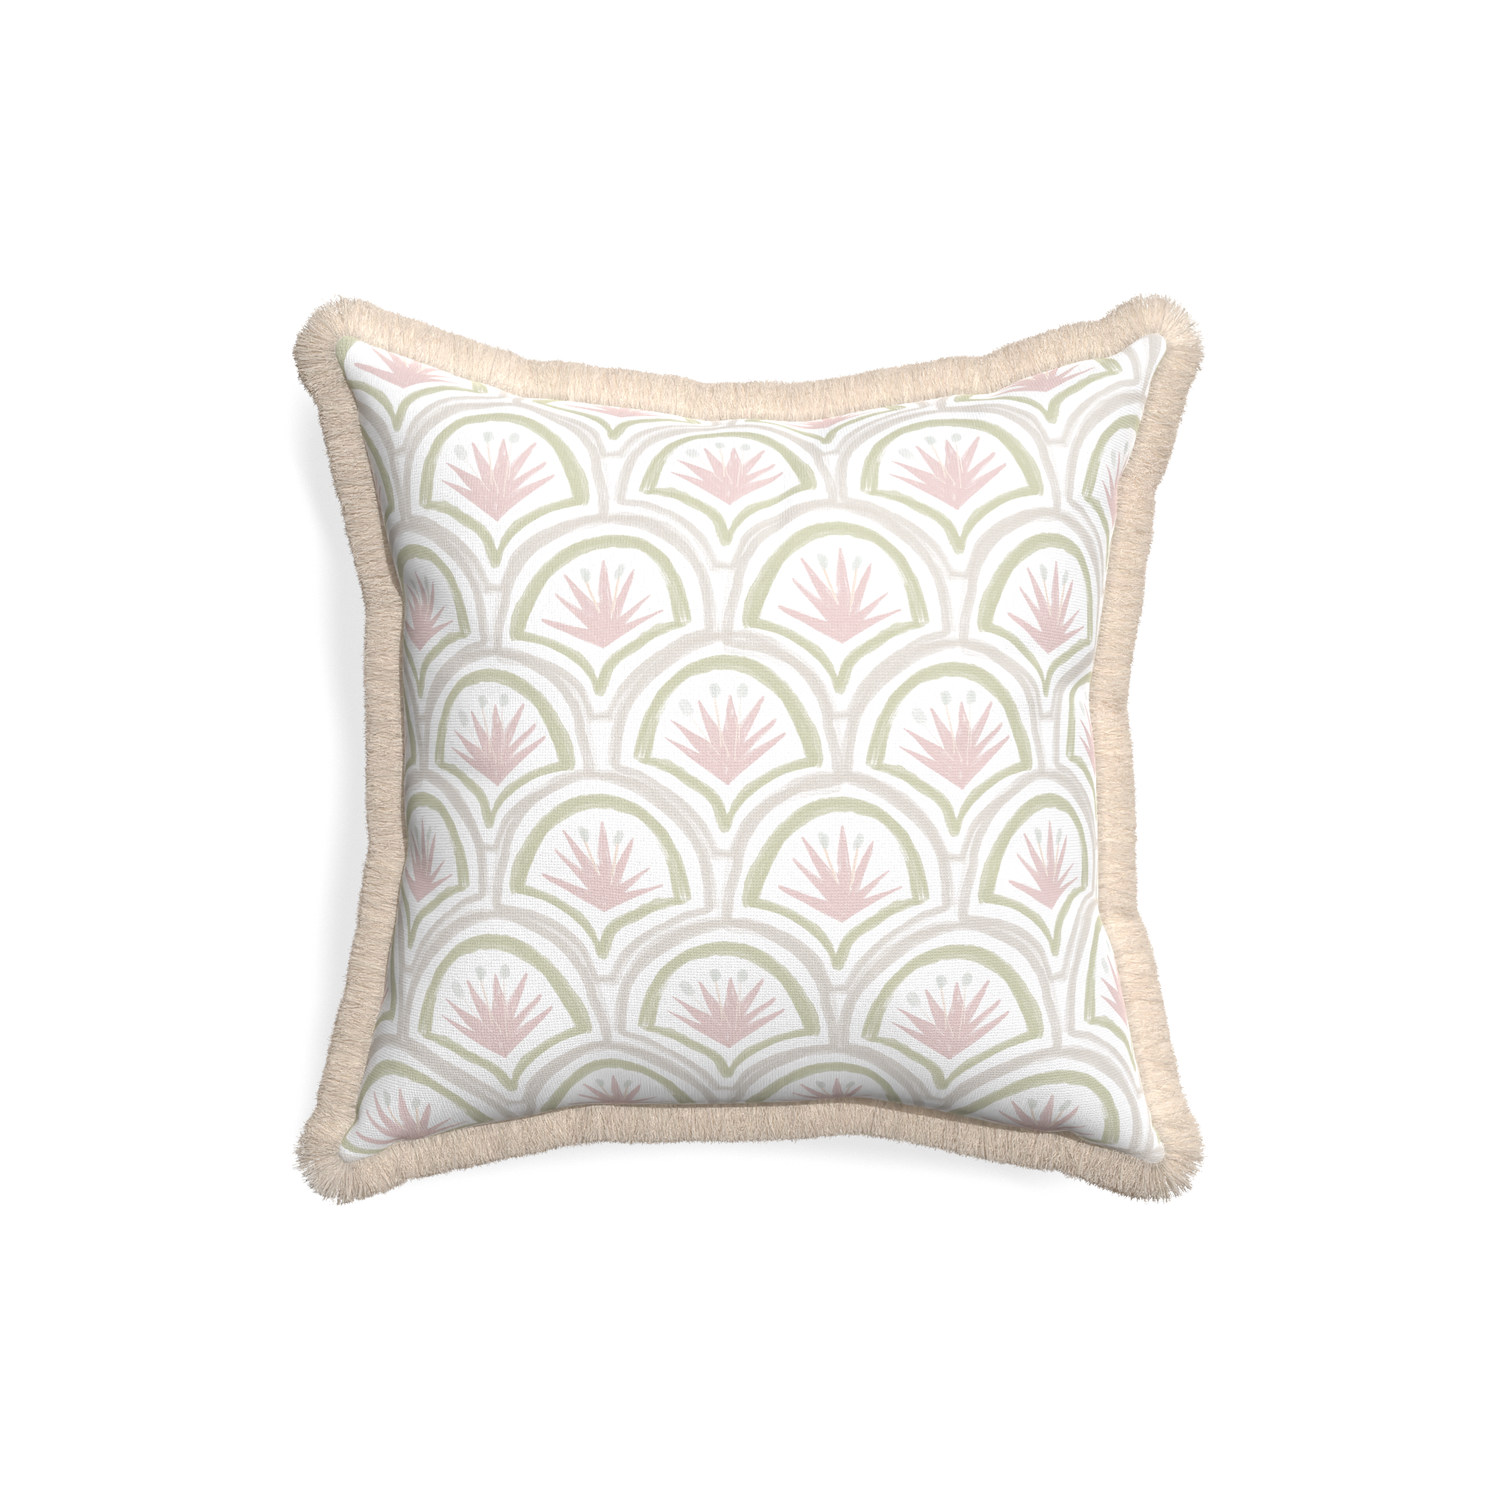 18-square thatcher rose custom pillow with cream fringe on white background